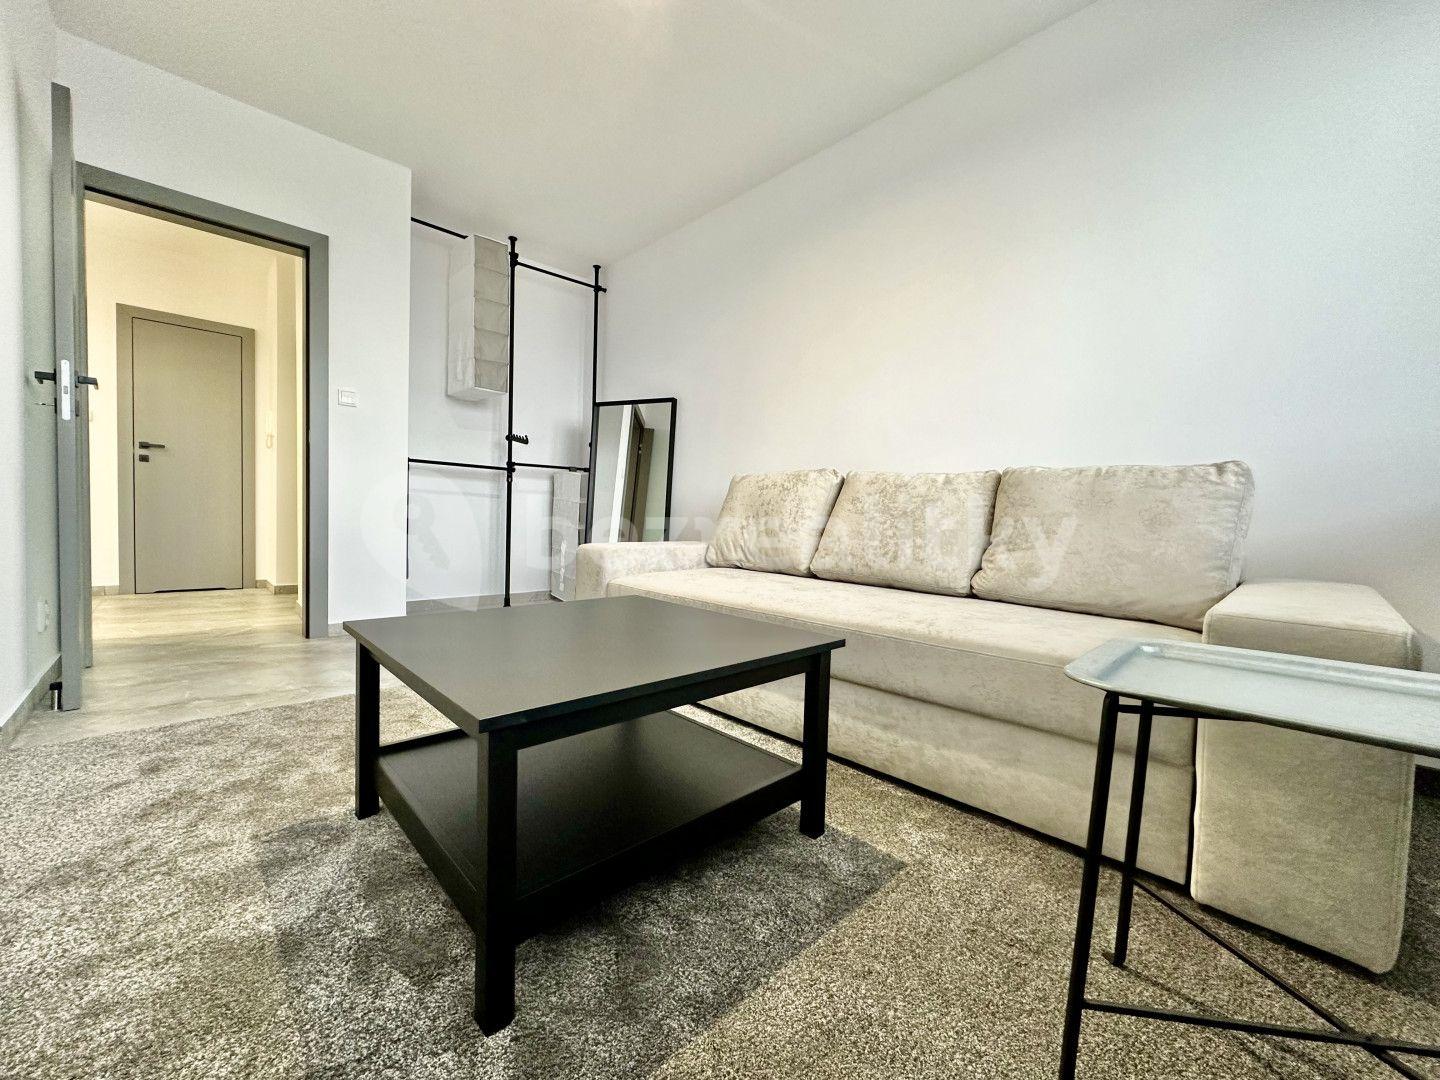 3 bedroom with open-plan kitchen flat for sale, 87 m², Karasova, Ostrava, Moravskoslezský Region